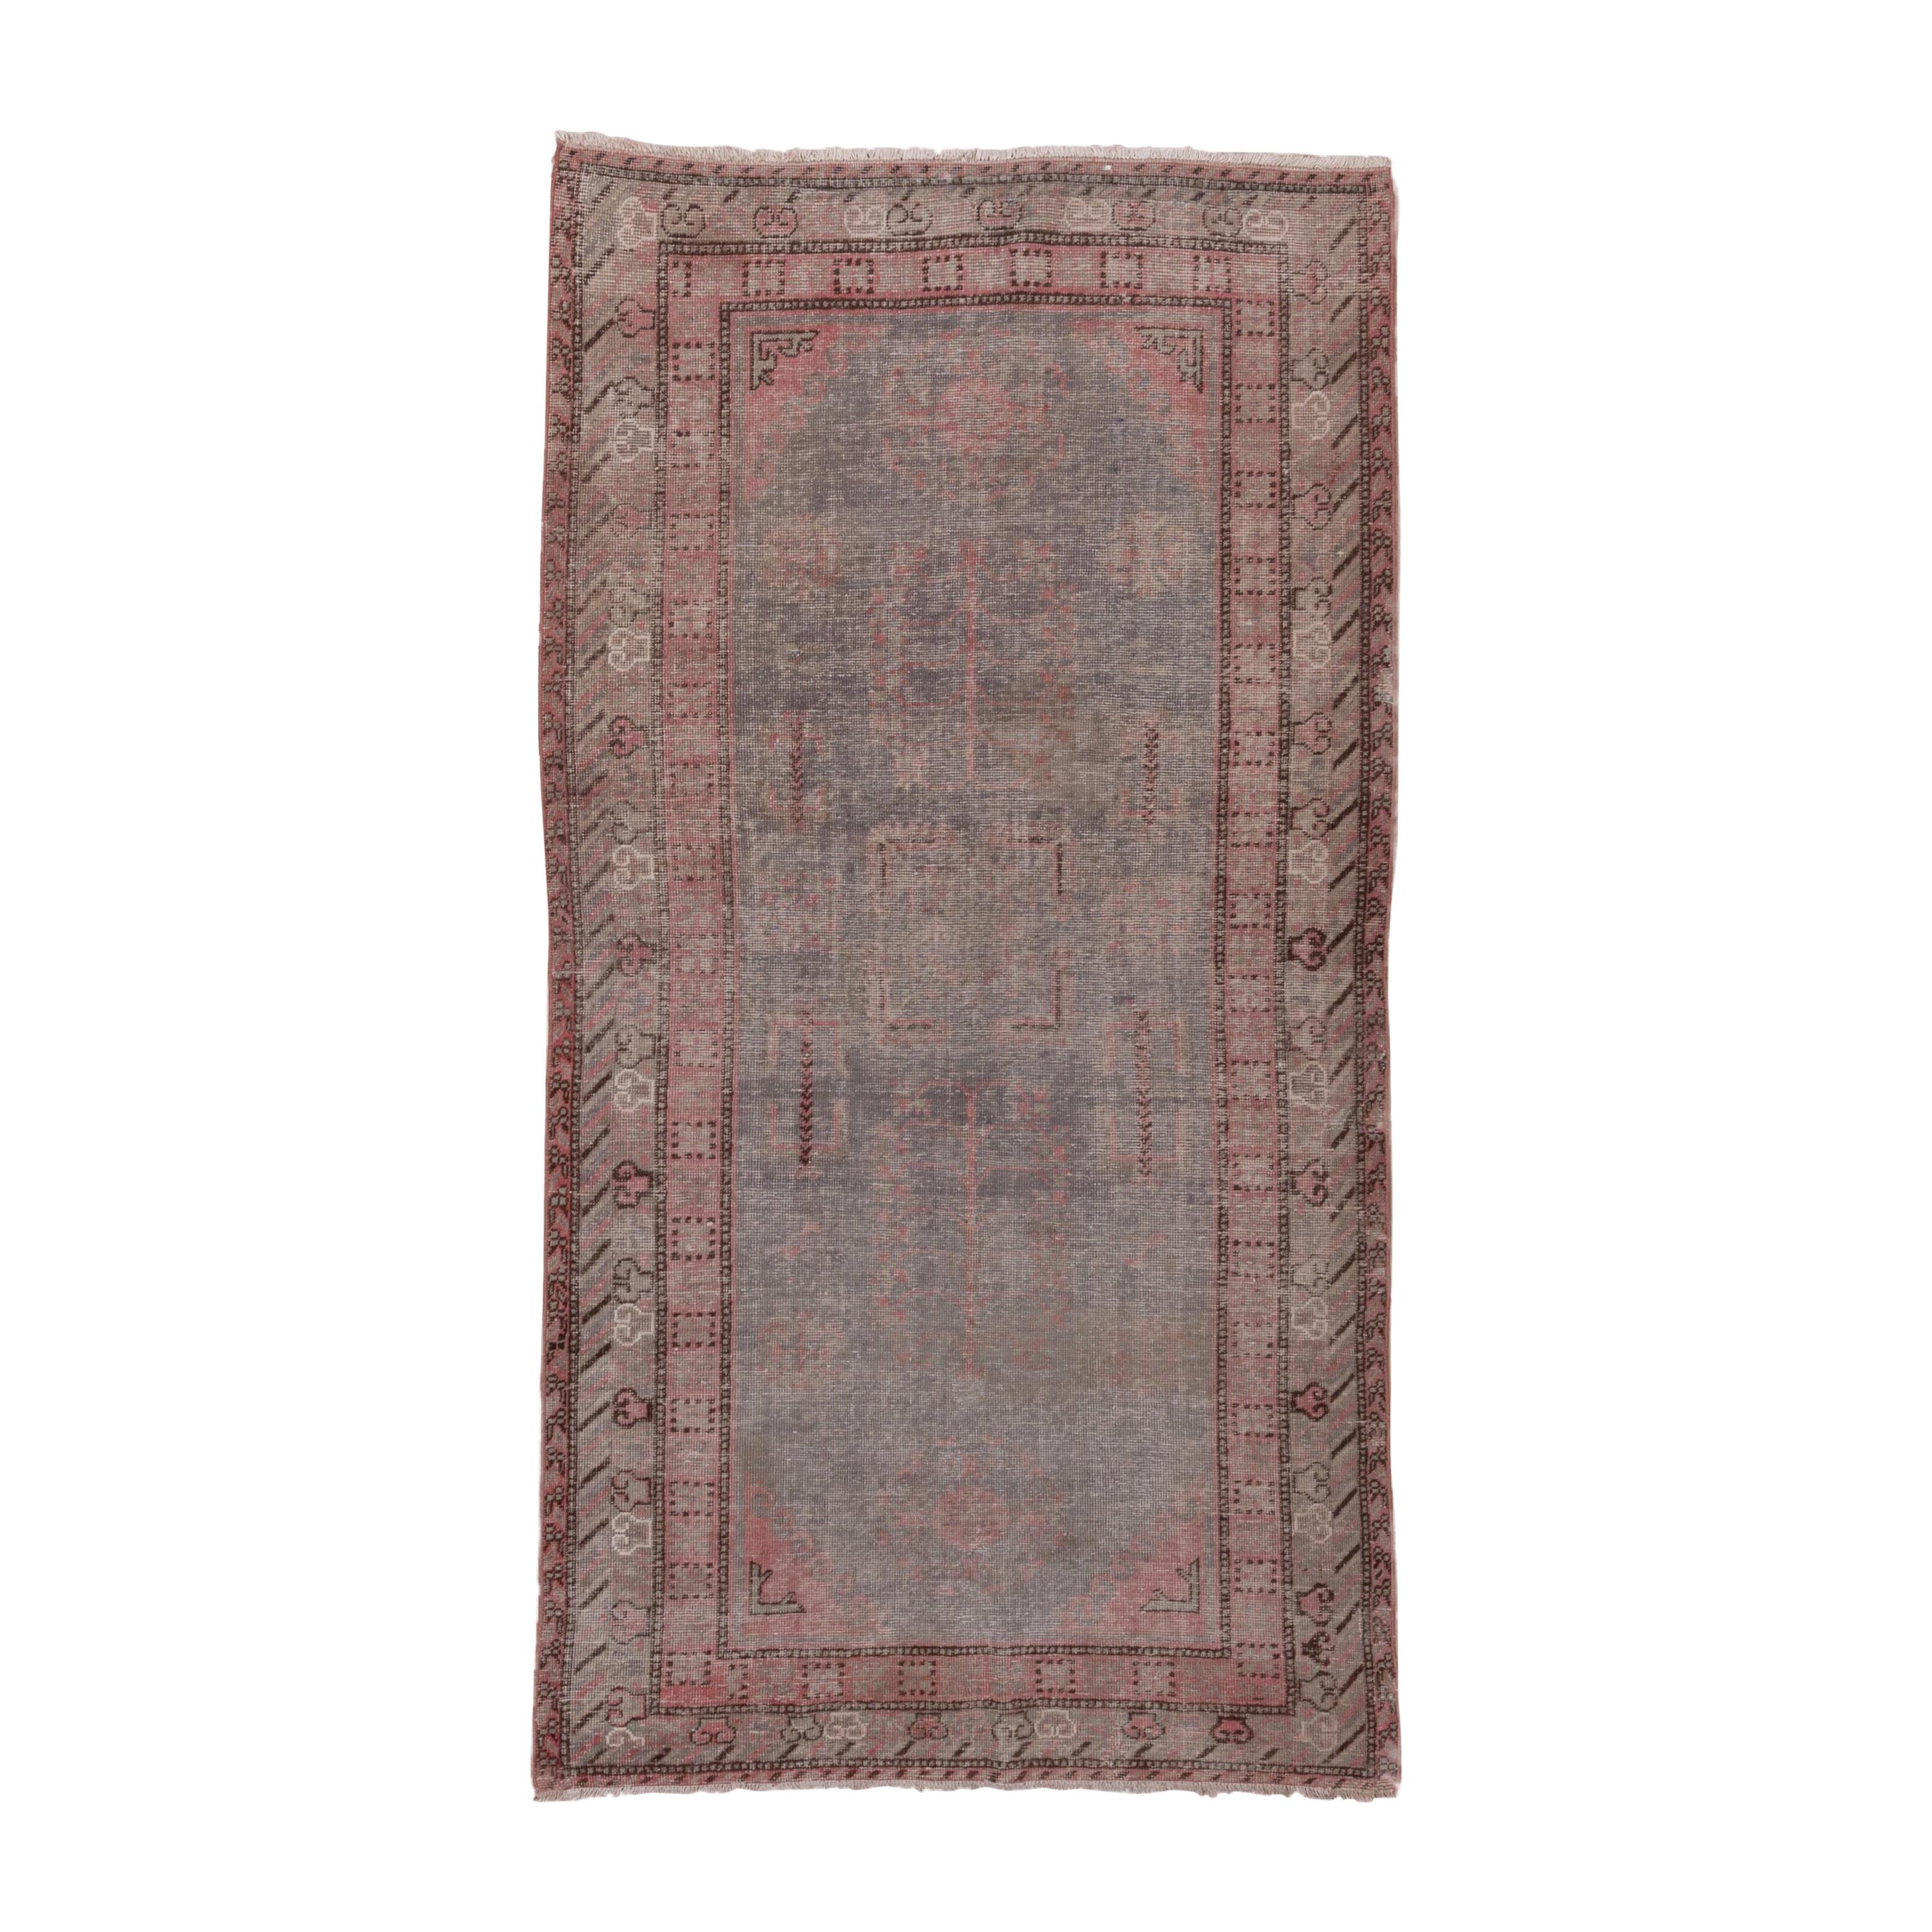 Antique Khotan Rug, Light Gray Field, Pink Borders, Lighly Distressed For Sale